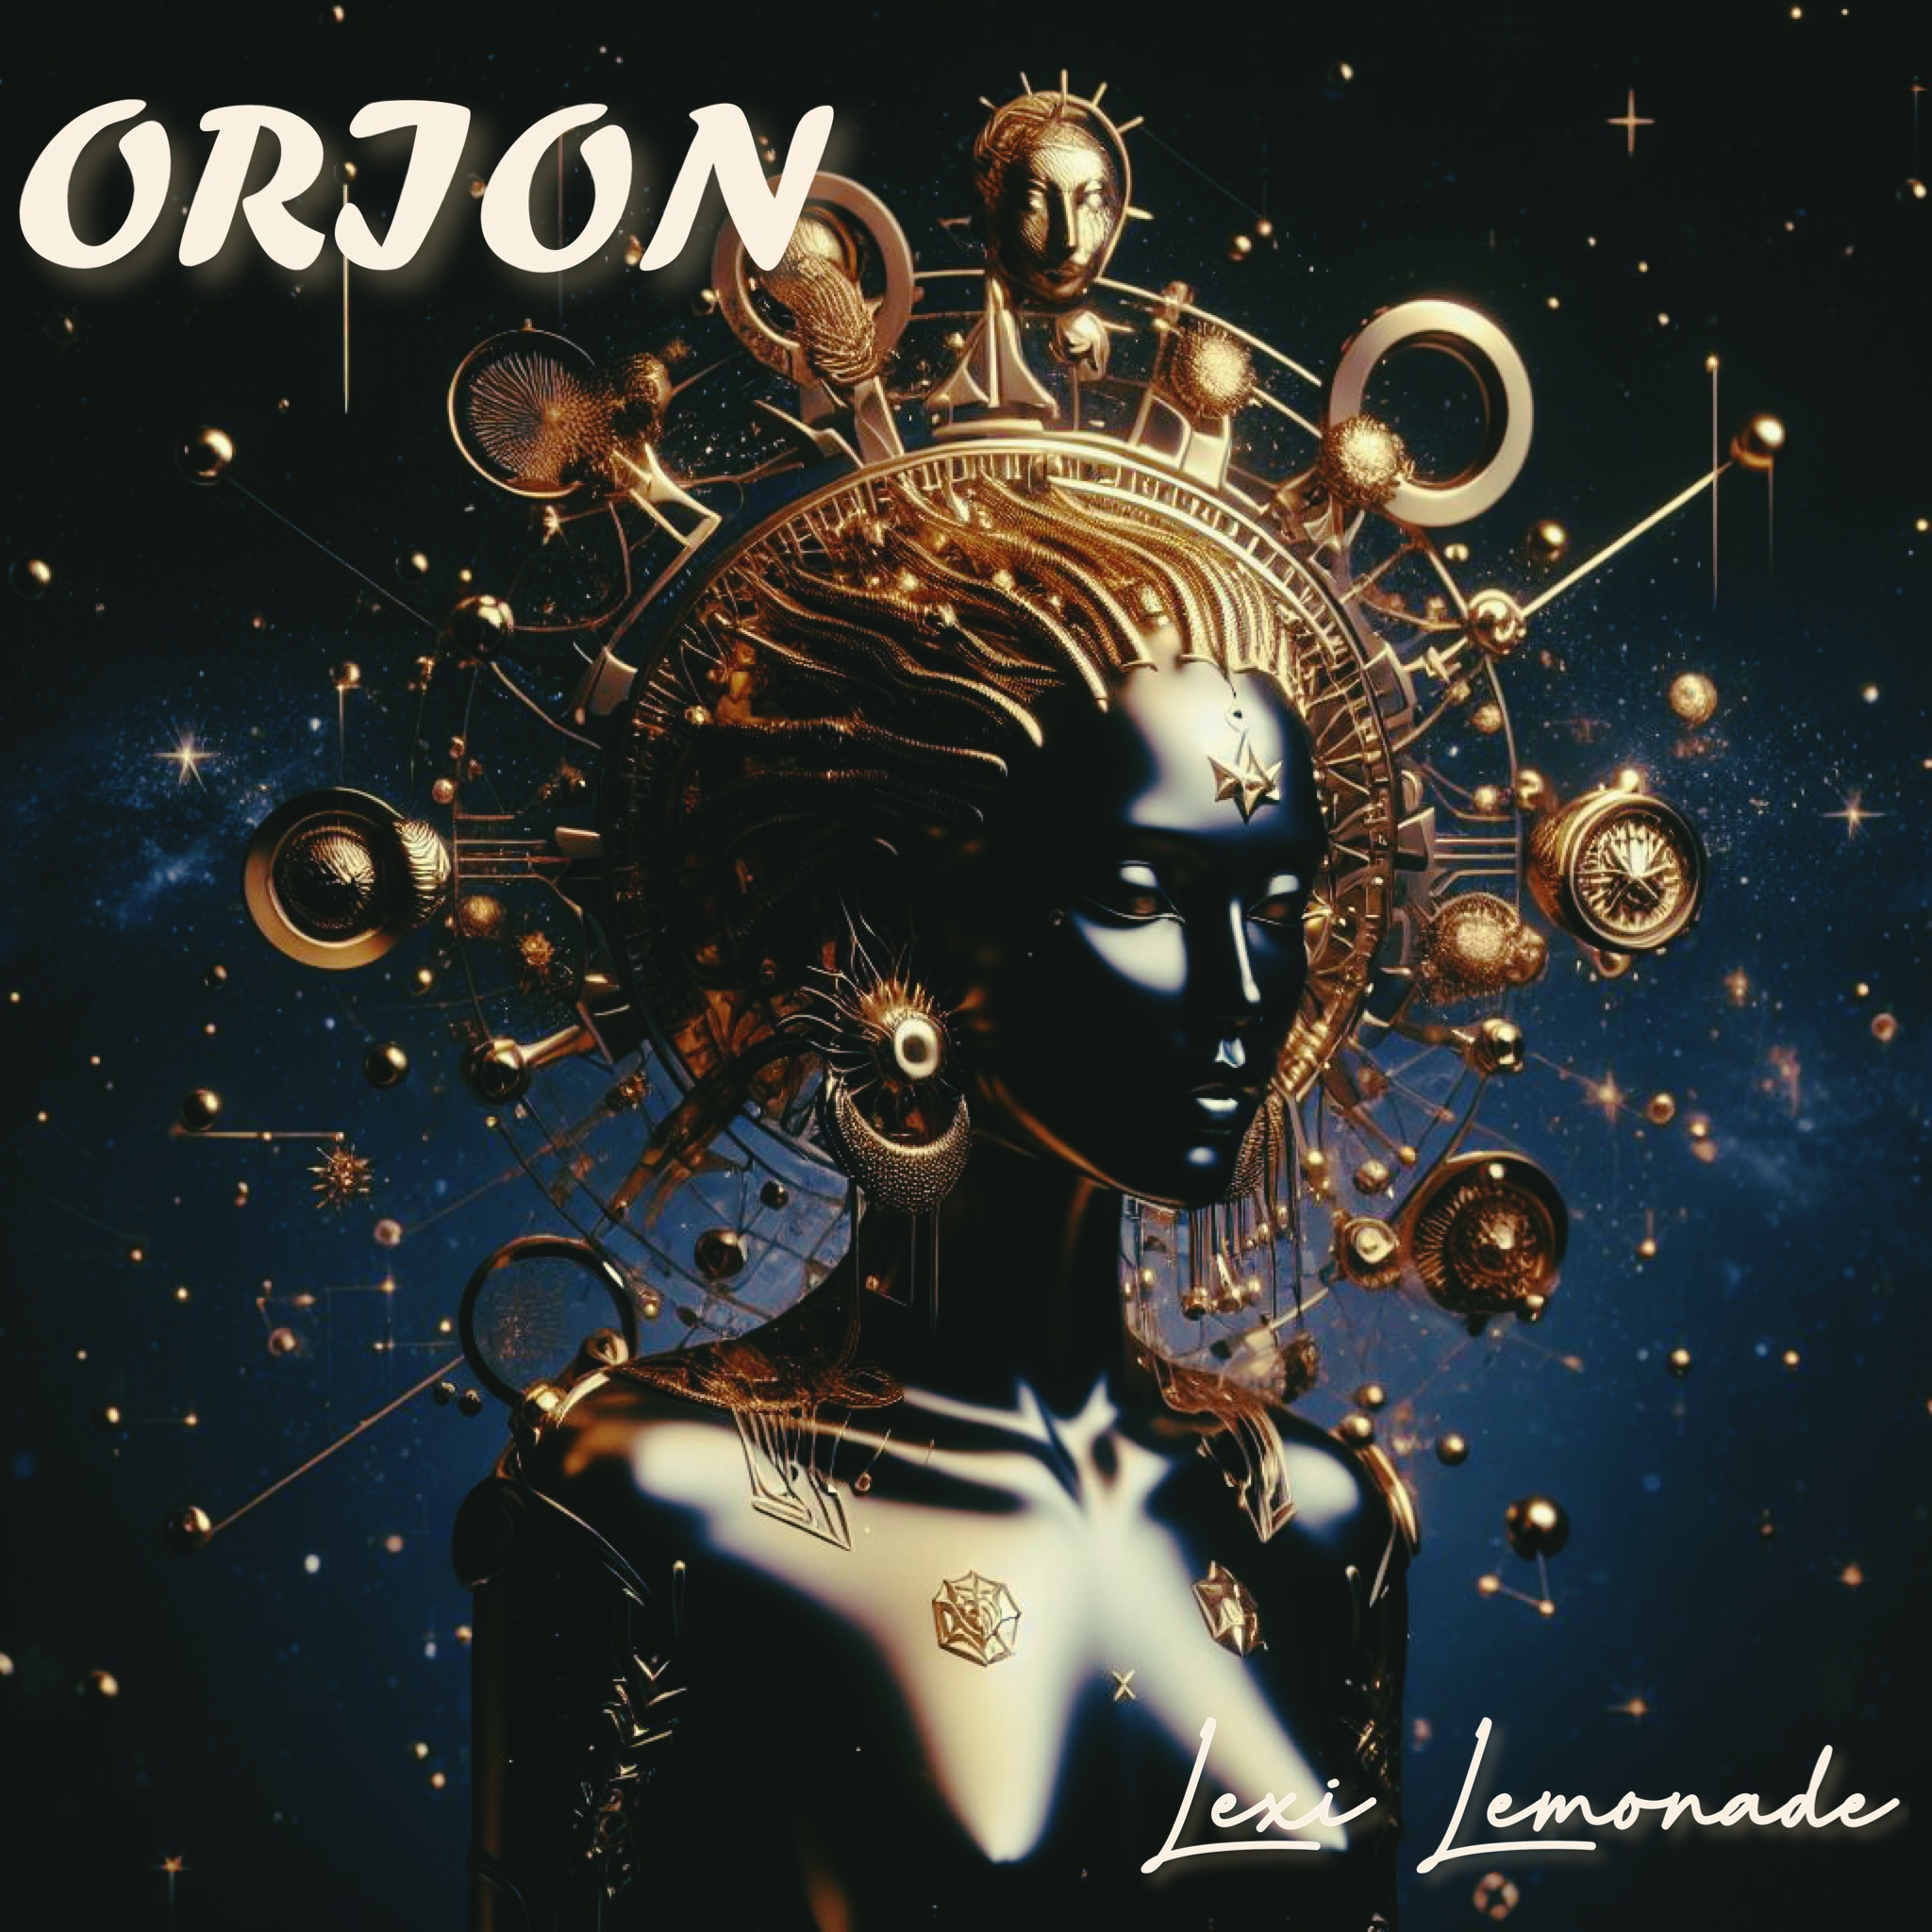 Lexi Lemonade reveals a spacious ethereal single titled “Orion”